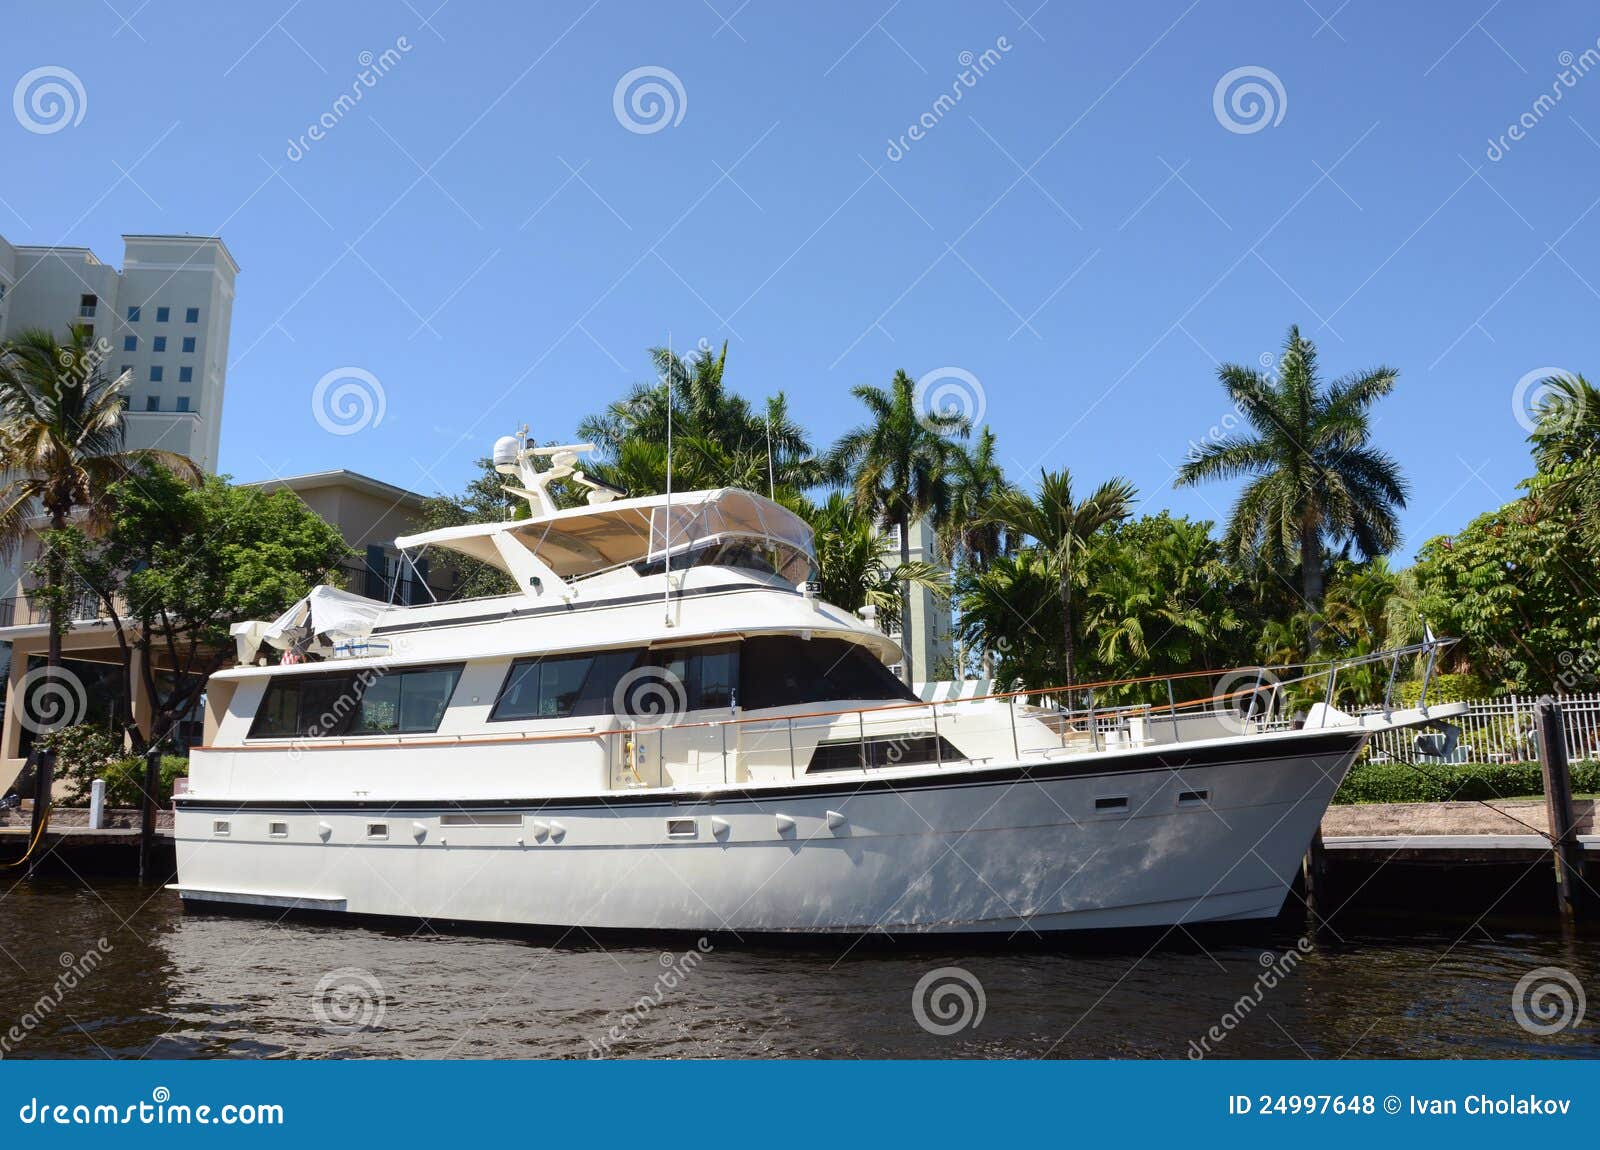 yacht in waterway